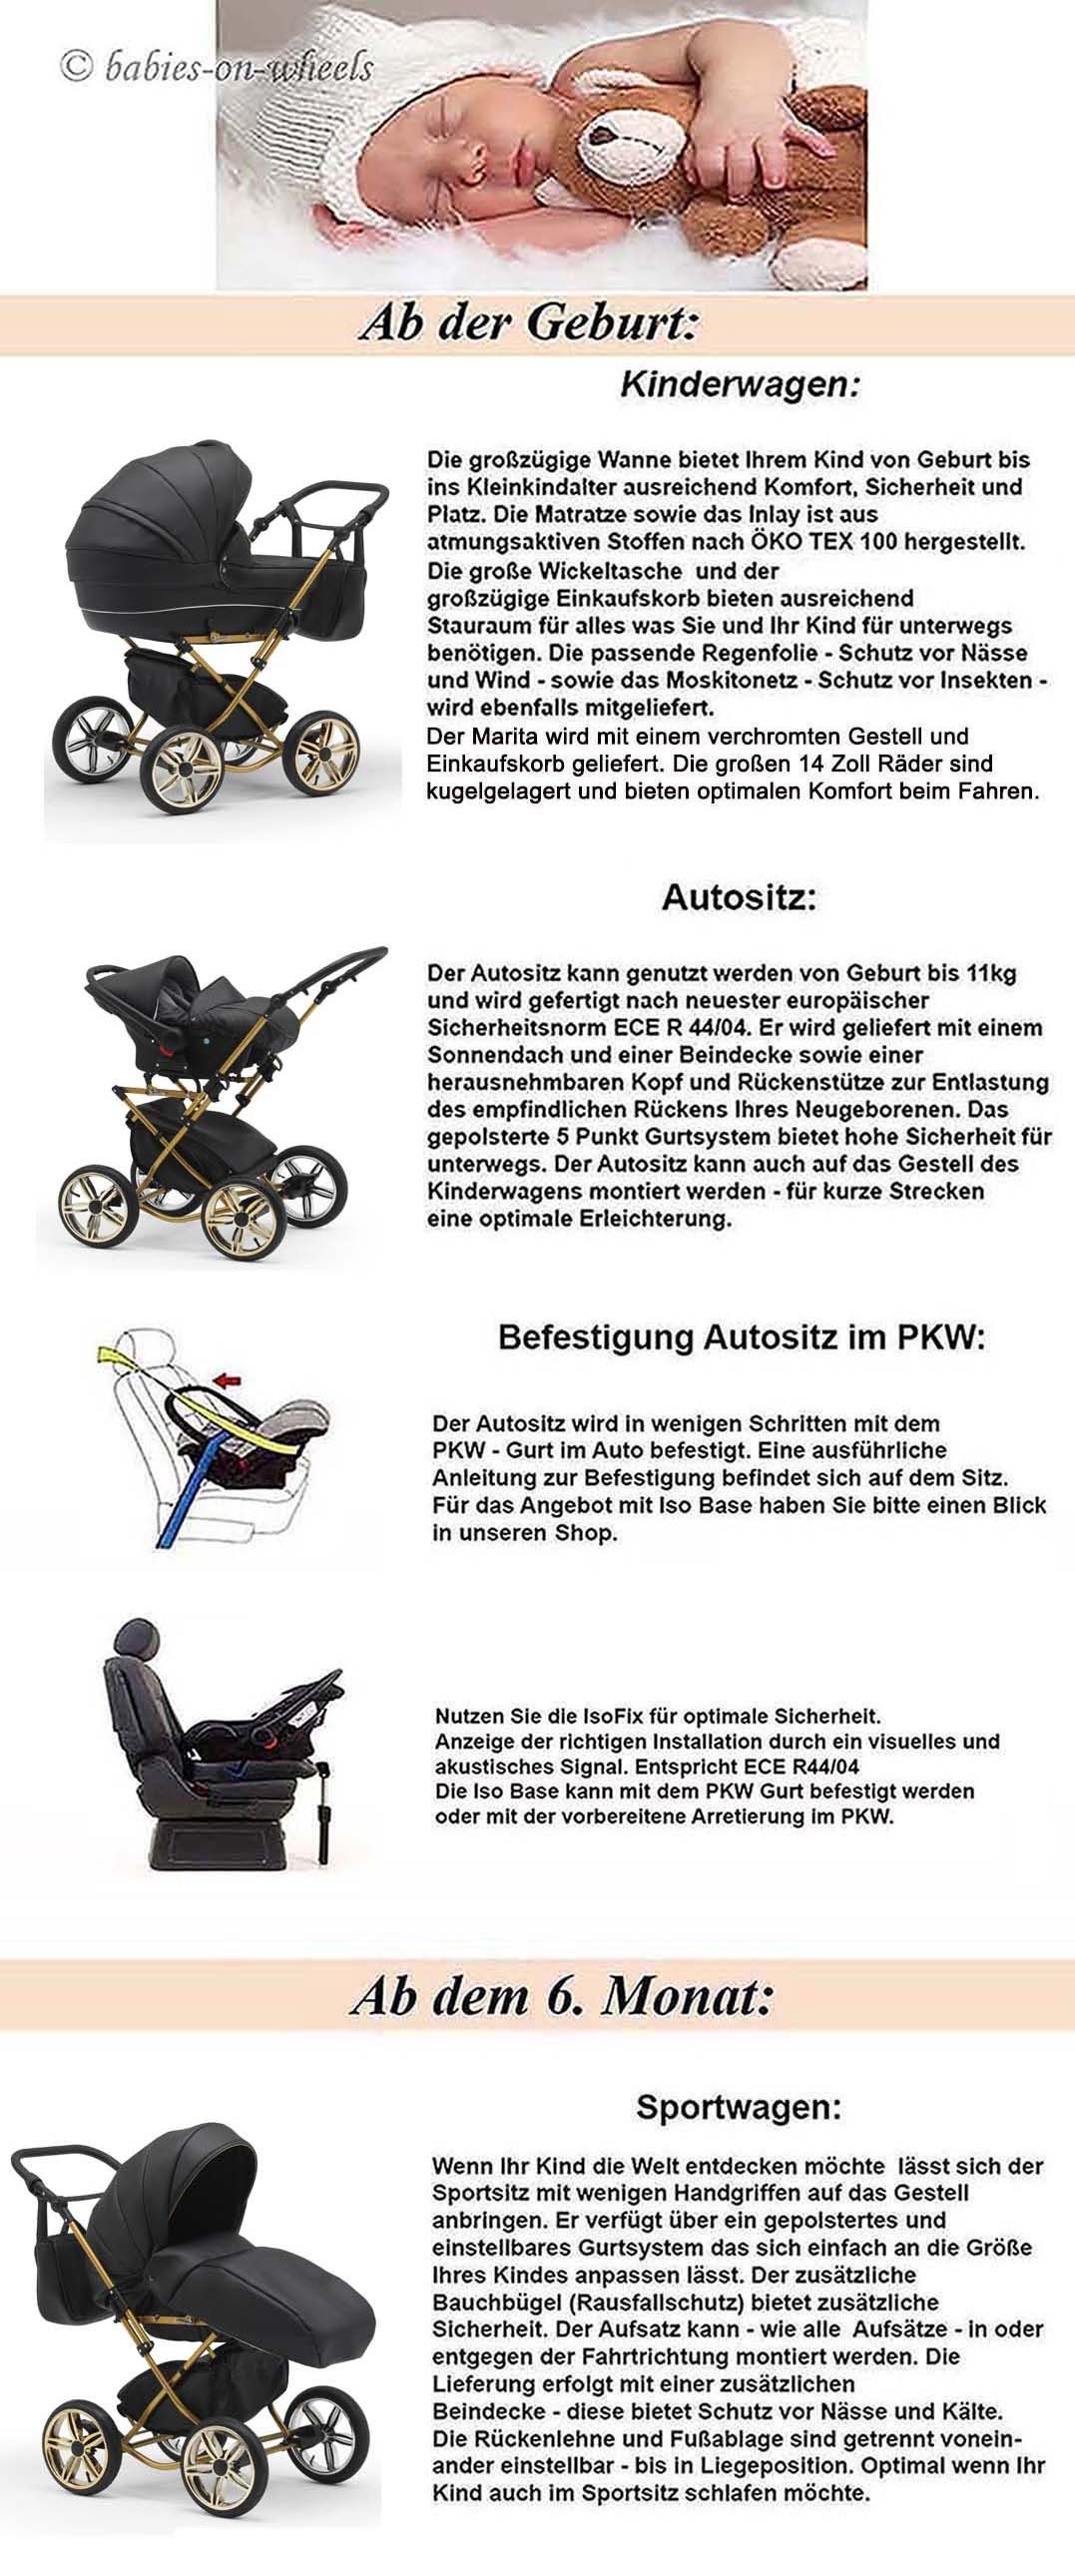 - babies-on-wheels inkl. in 4 1 Beige-Grau 14 Designs Kombi-Kinderwagen Iso Base 10 - in Teile Sorento Autositz und